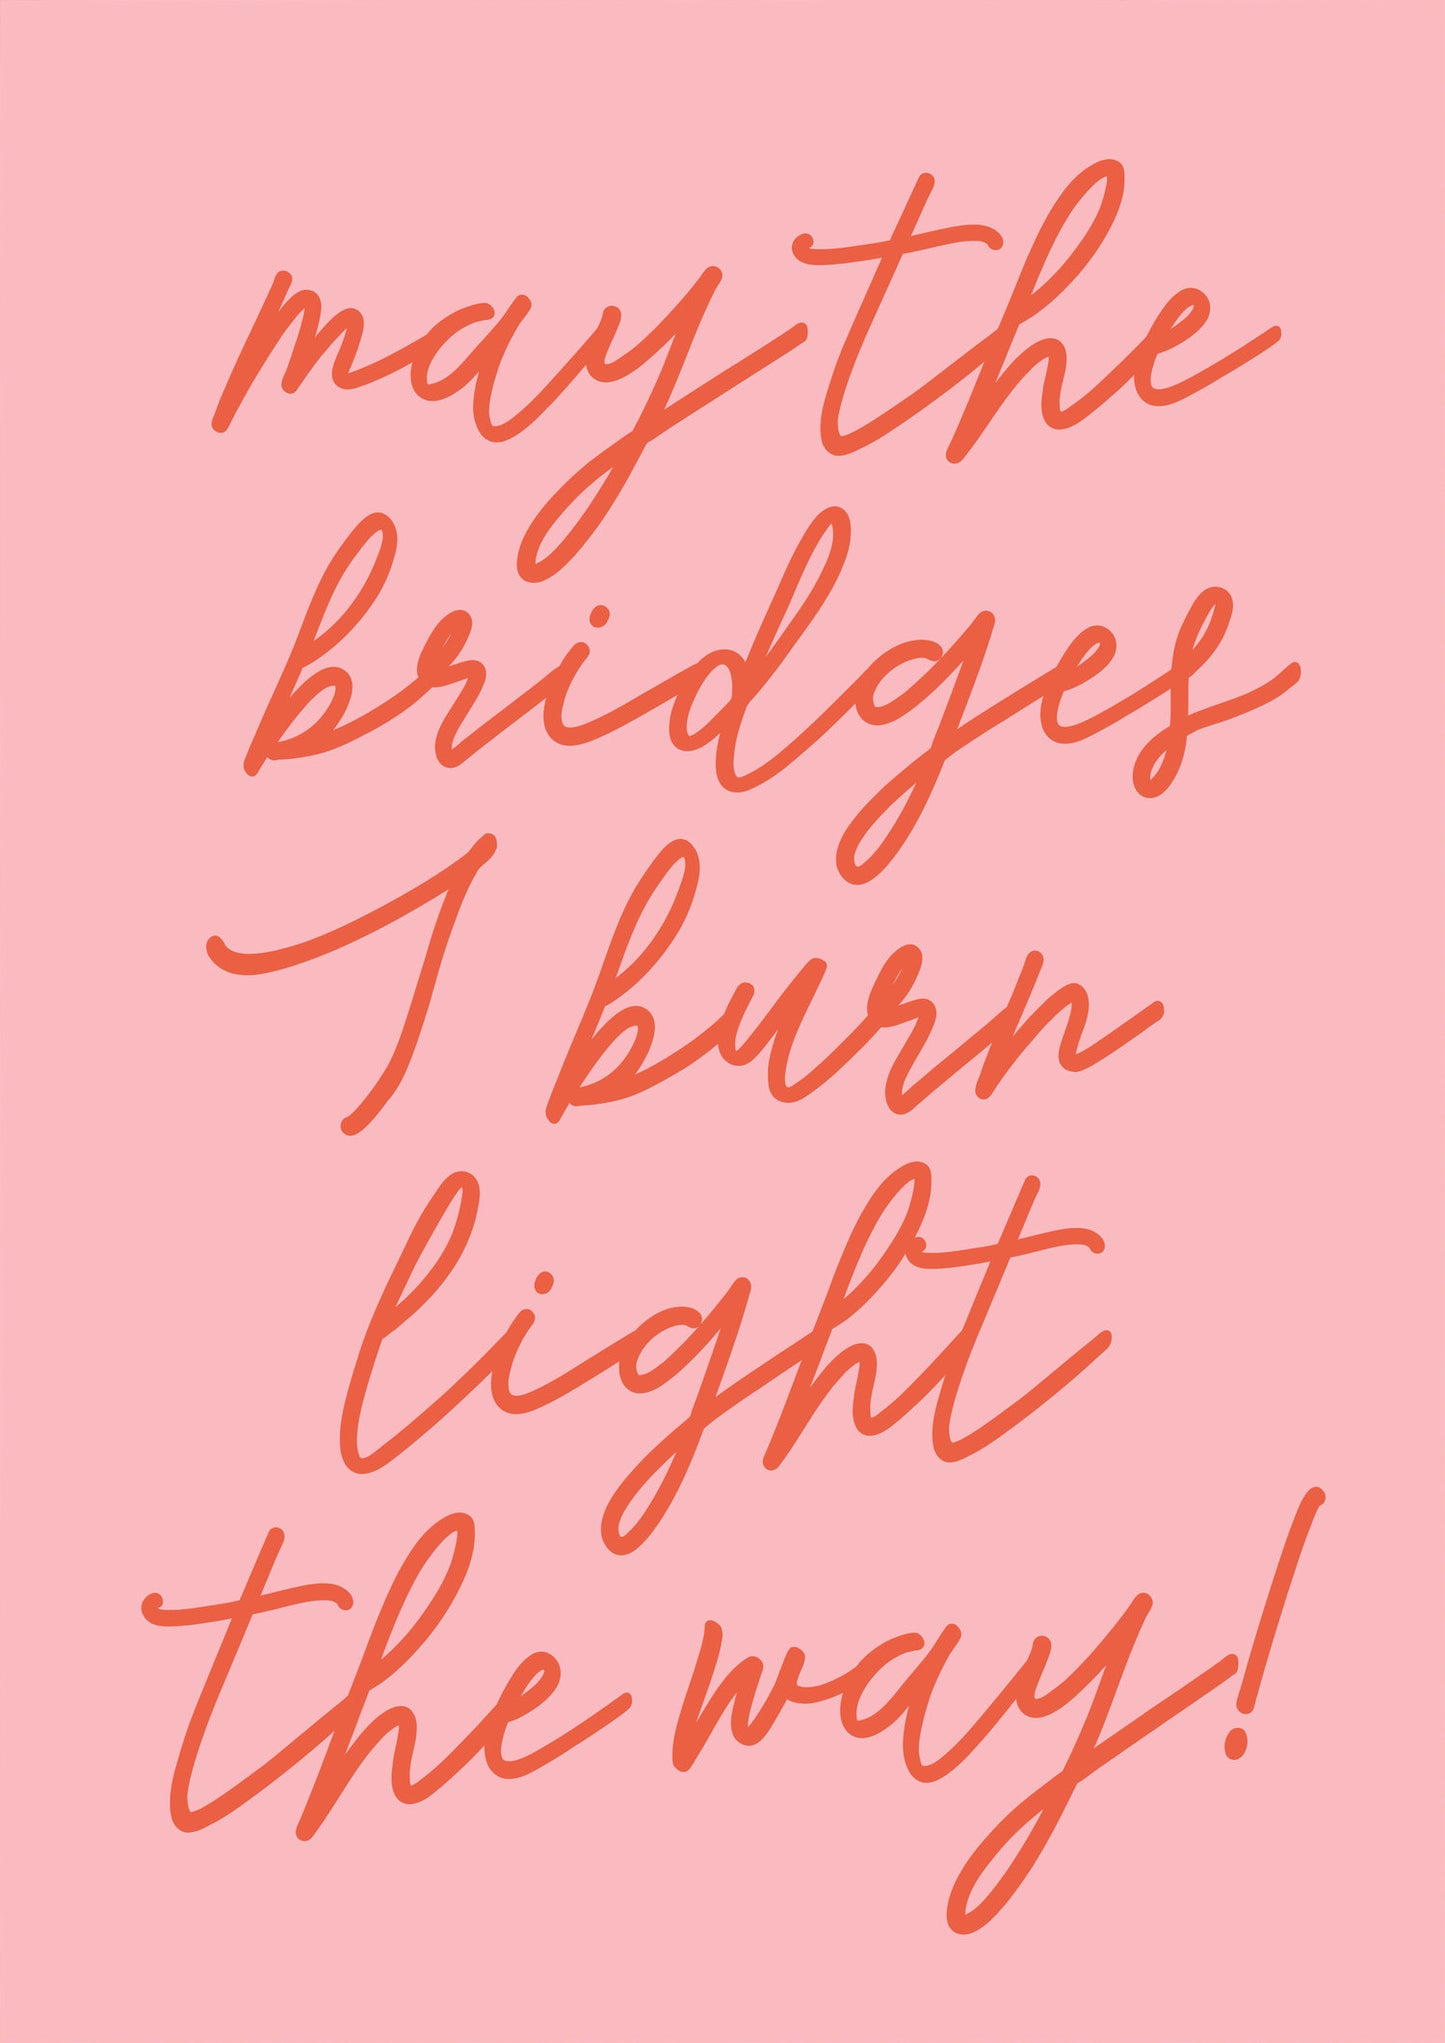 Art Print - The Bridges I Burn